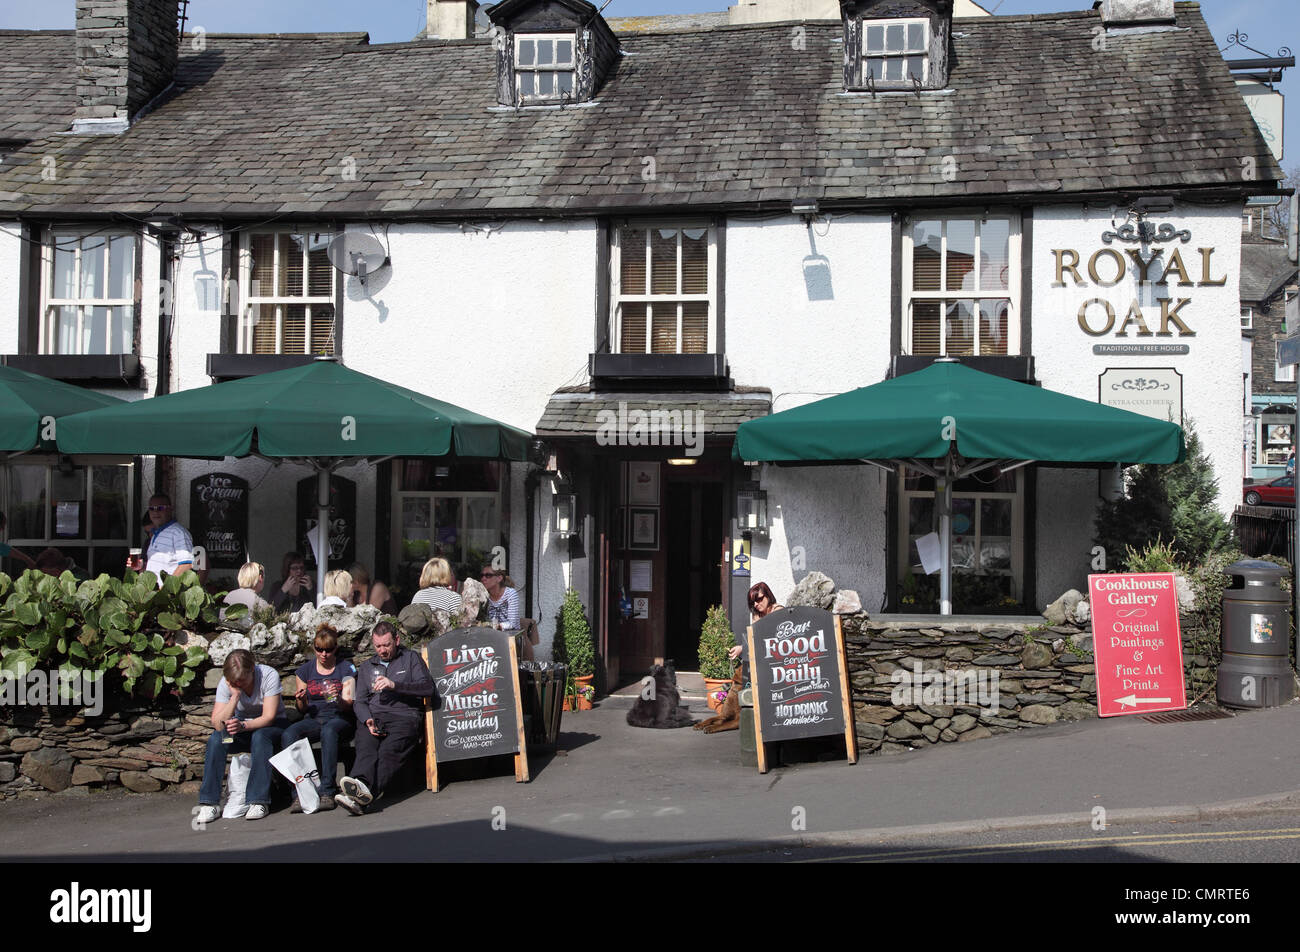 People drinking outside the Royal Oak pub in Ambleside, Cumbria, NW England, UK Stock Photo